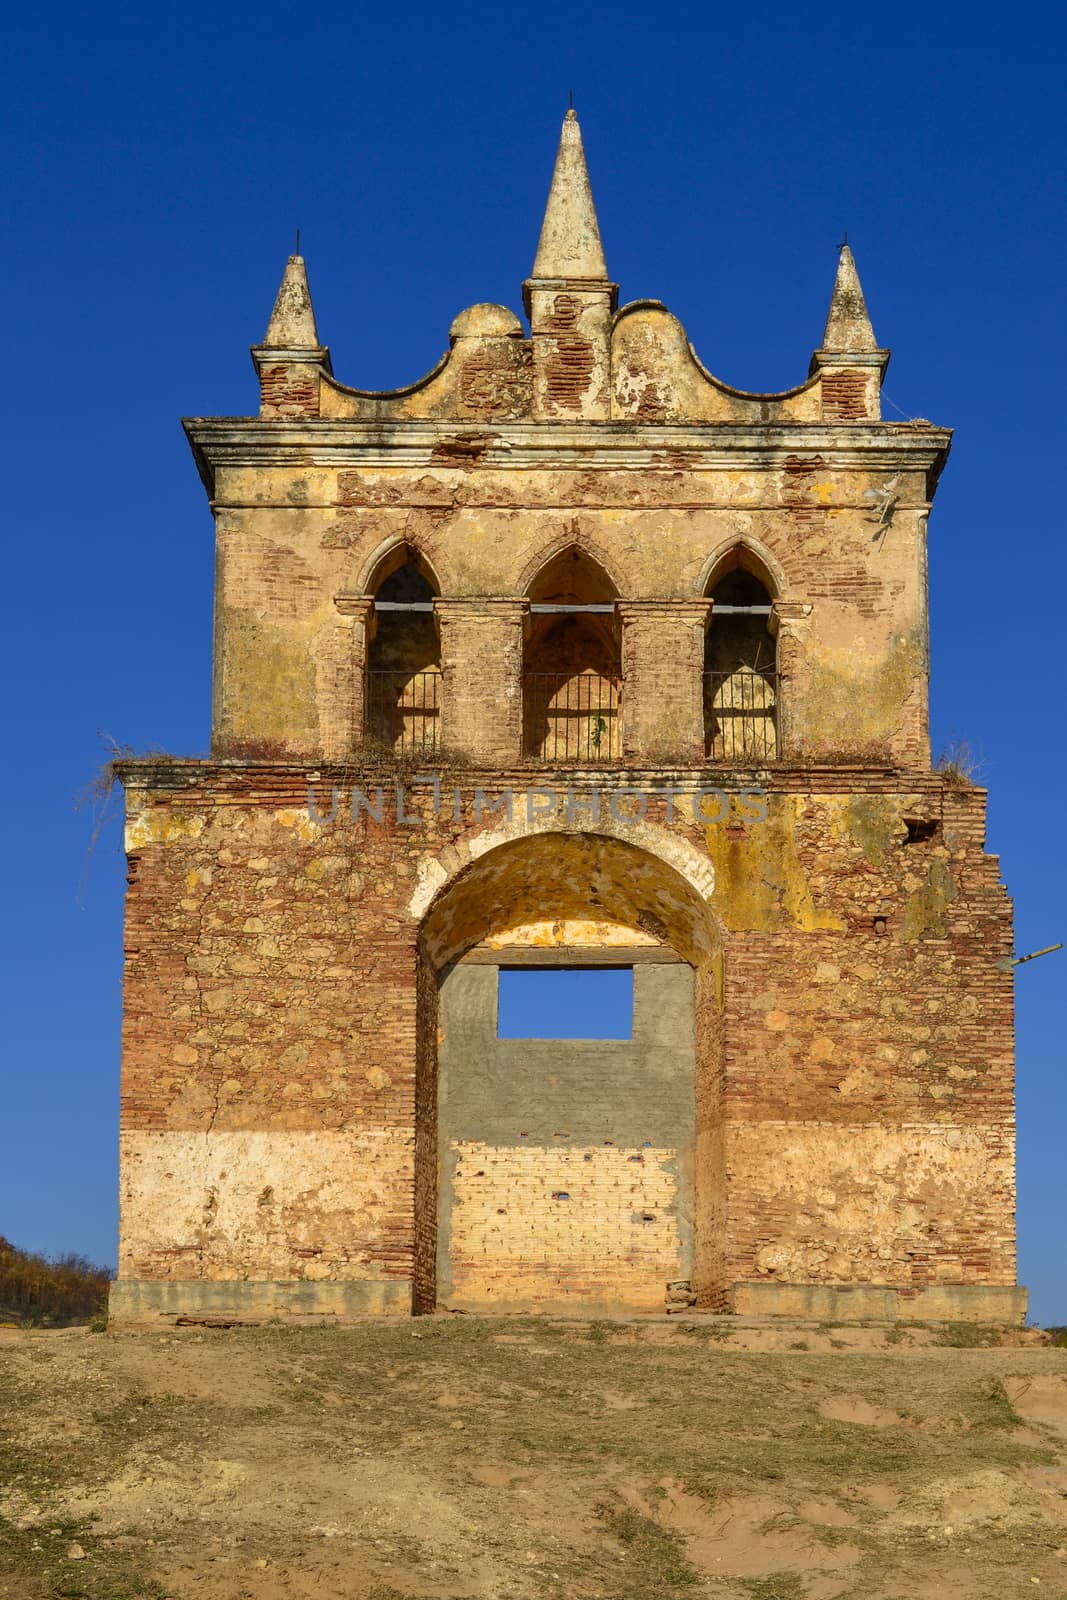 Trinidad, Cuba, February 2011: ruines of an old church at Cerro de la vigia